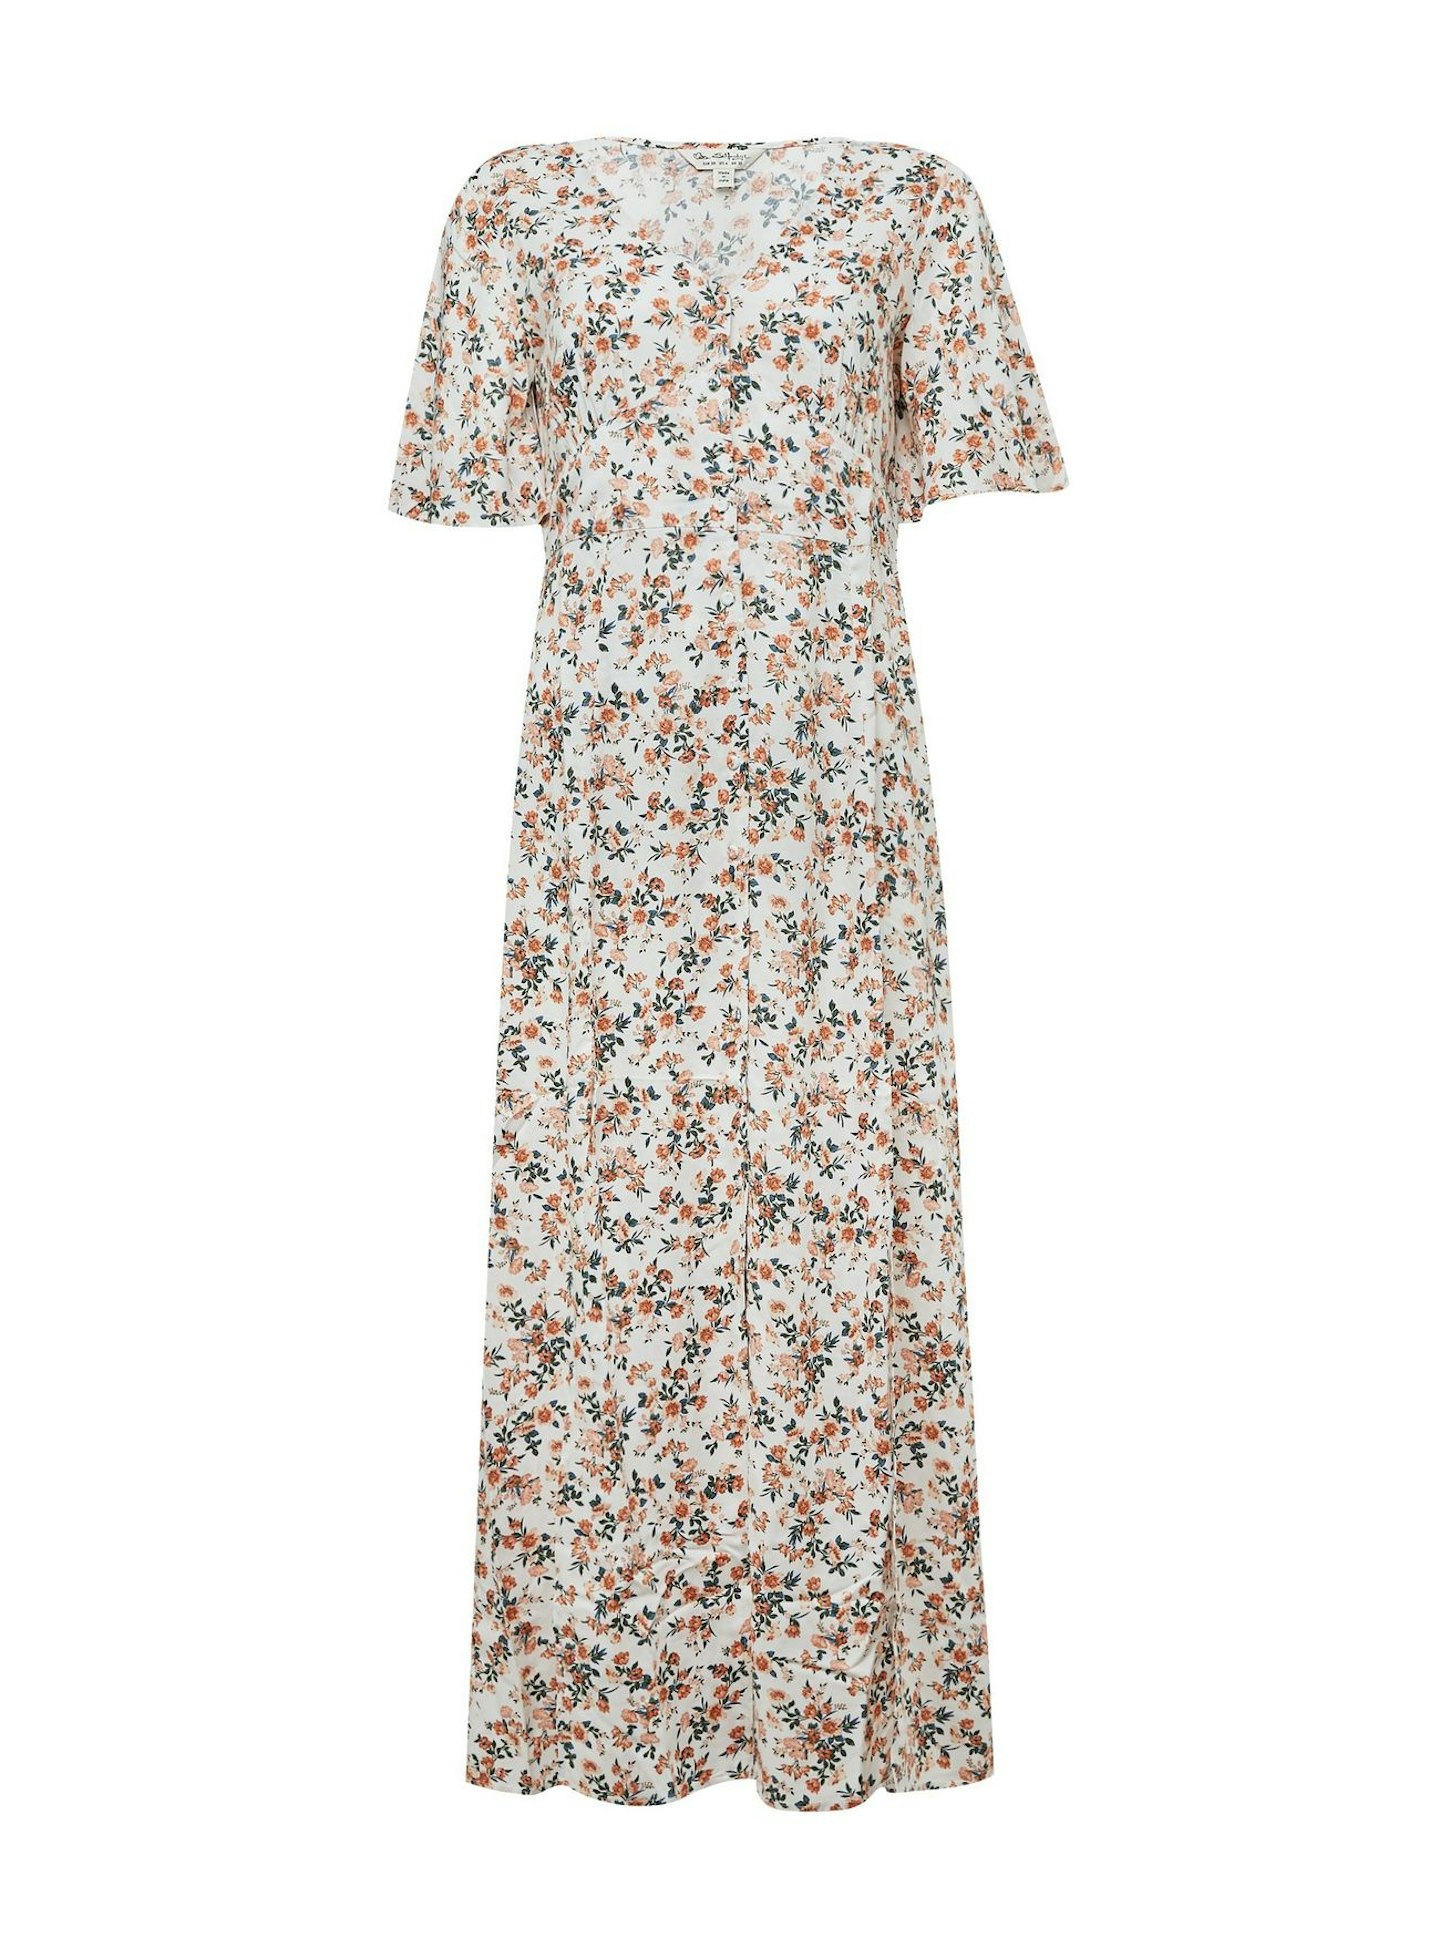 Miss Selfridge, Peach Floral Dress, £35